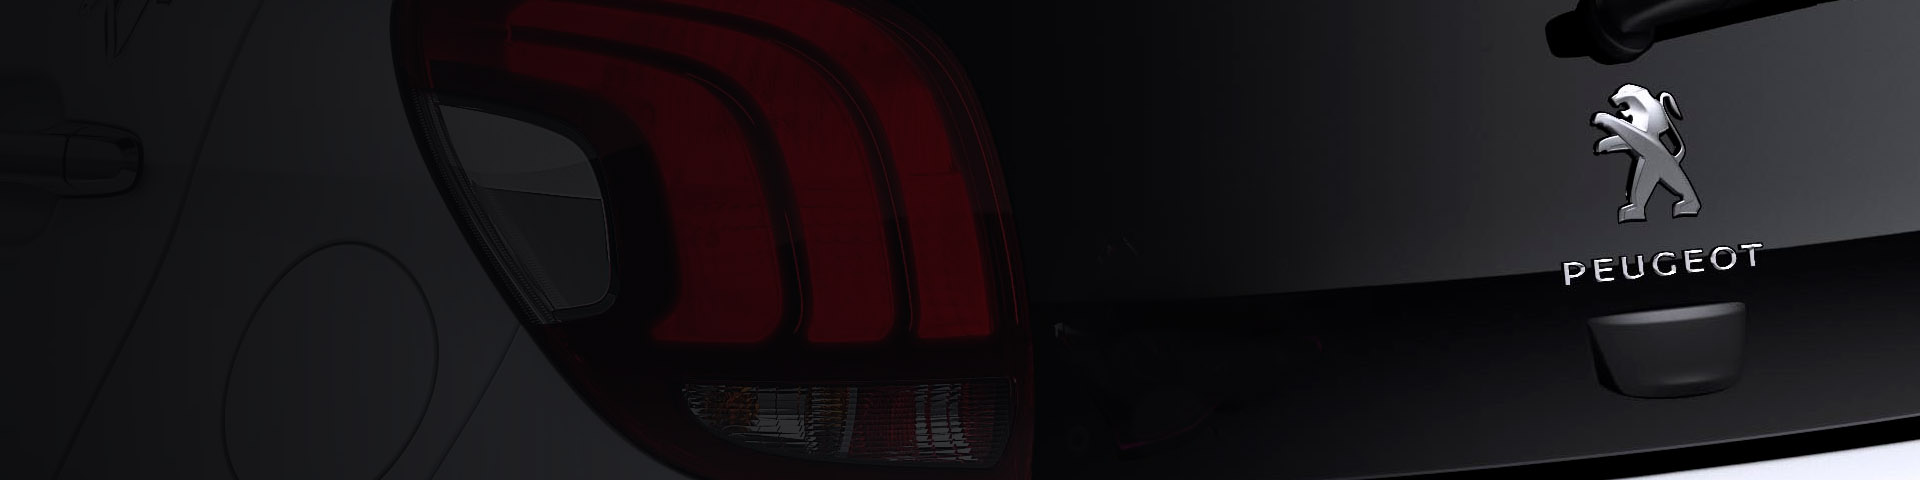 Peugeot 508 Diesel Fastback Backdrop